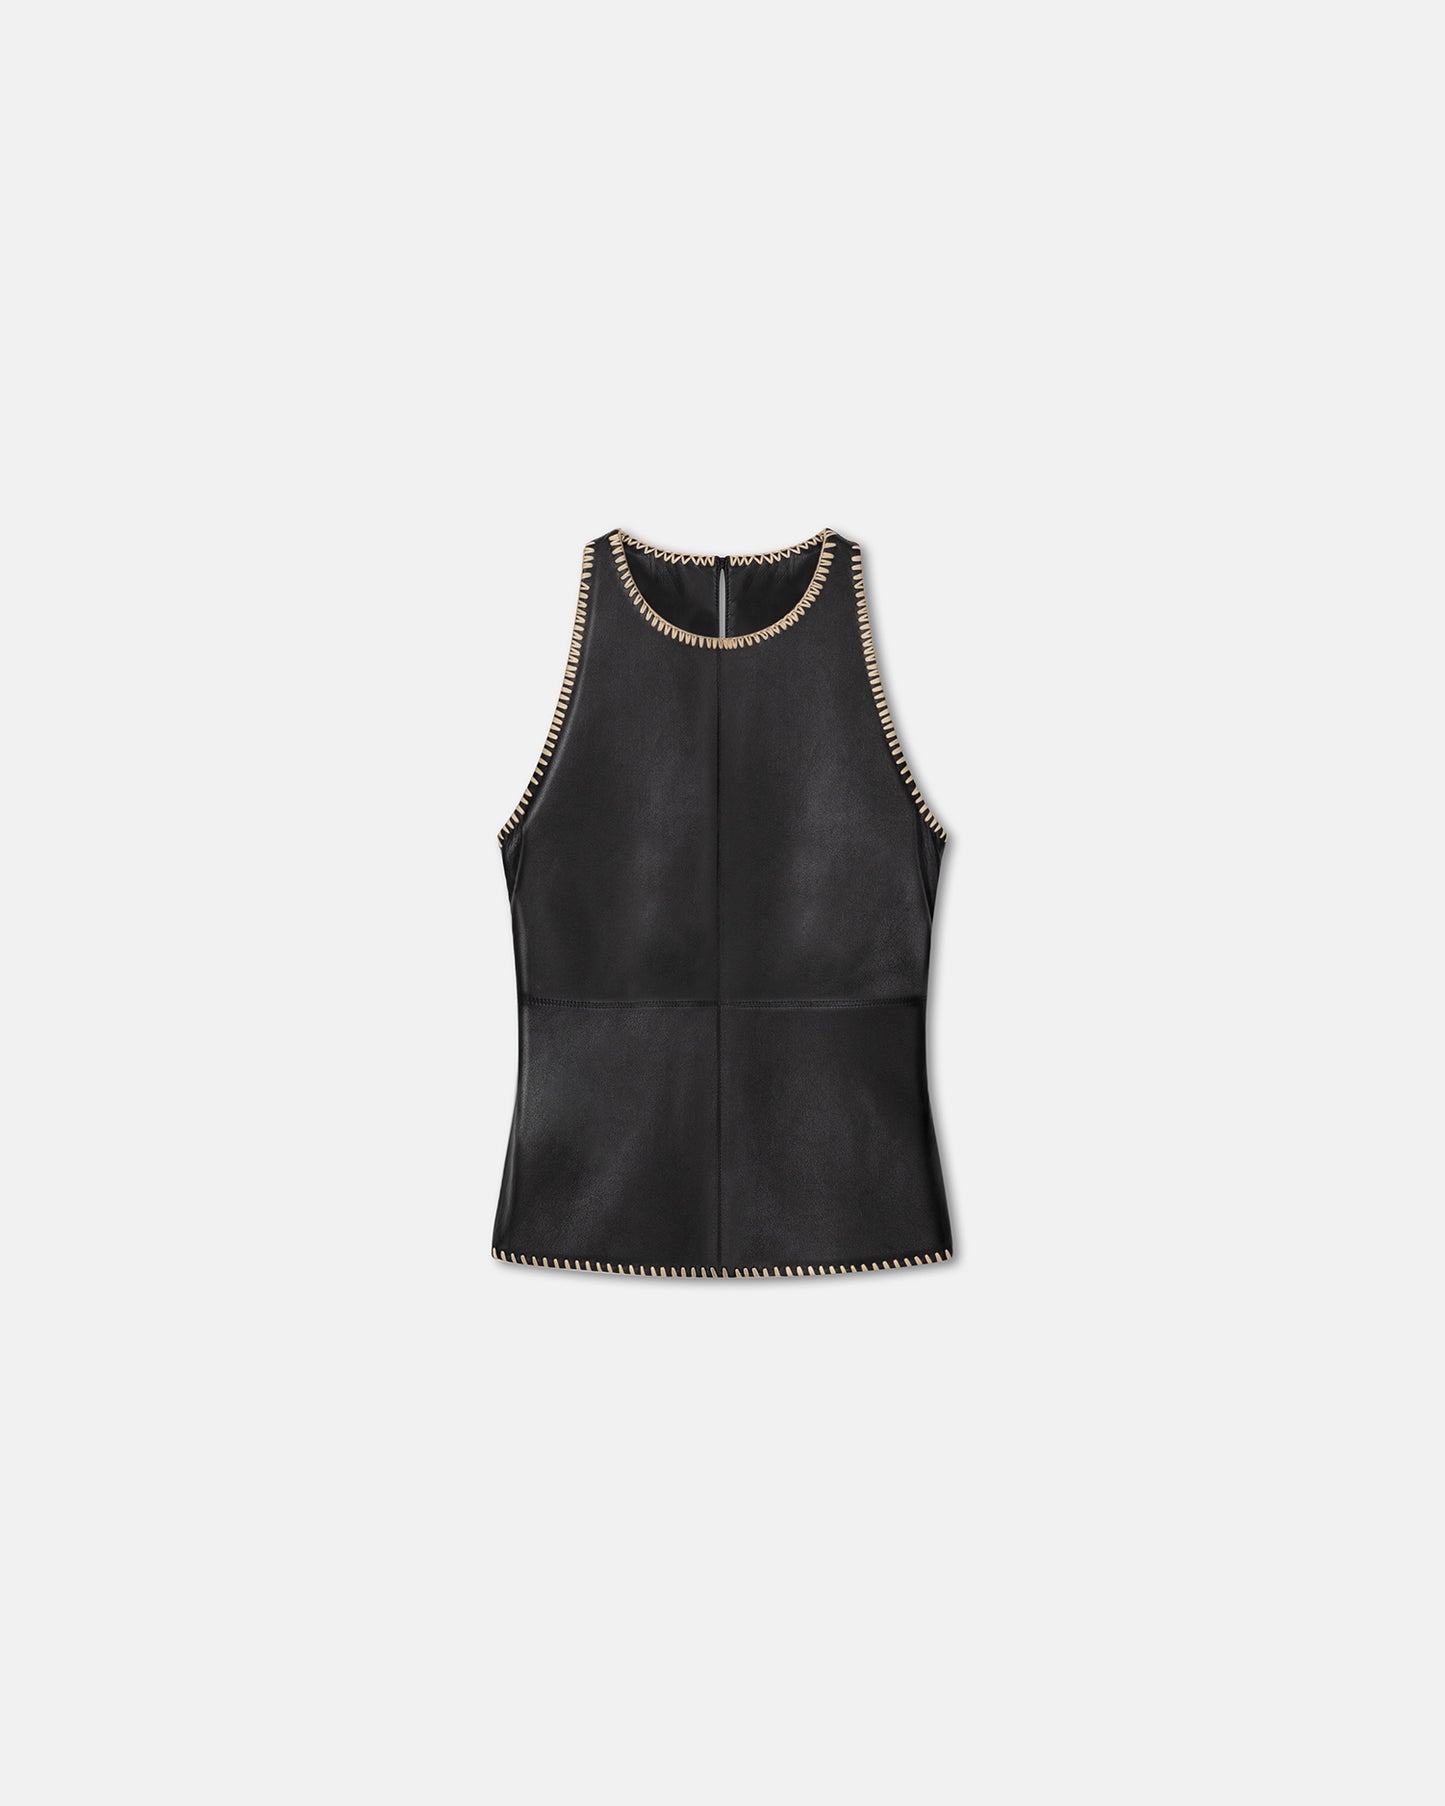 Teza - Okobor™ Embroidered Alt-Leather Top - Black